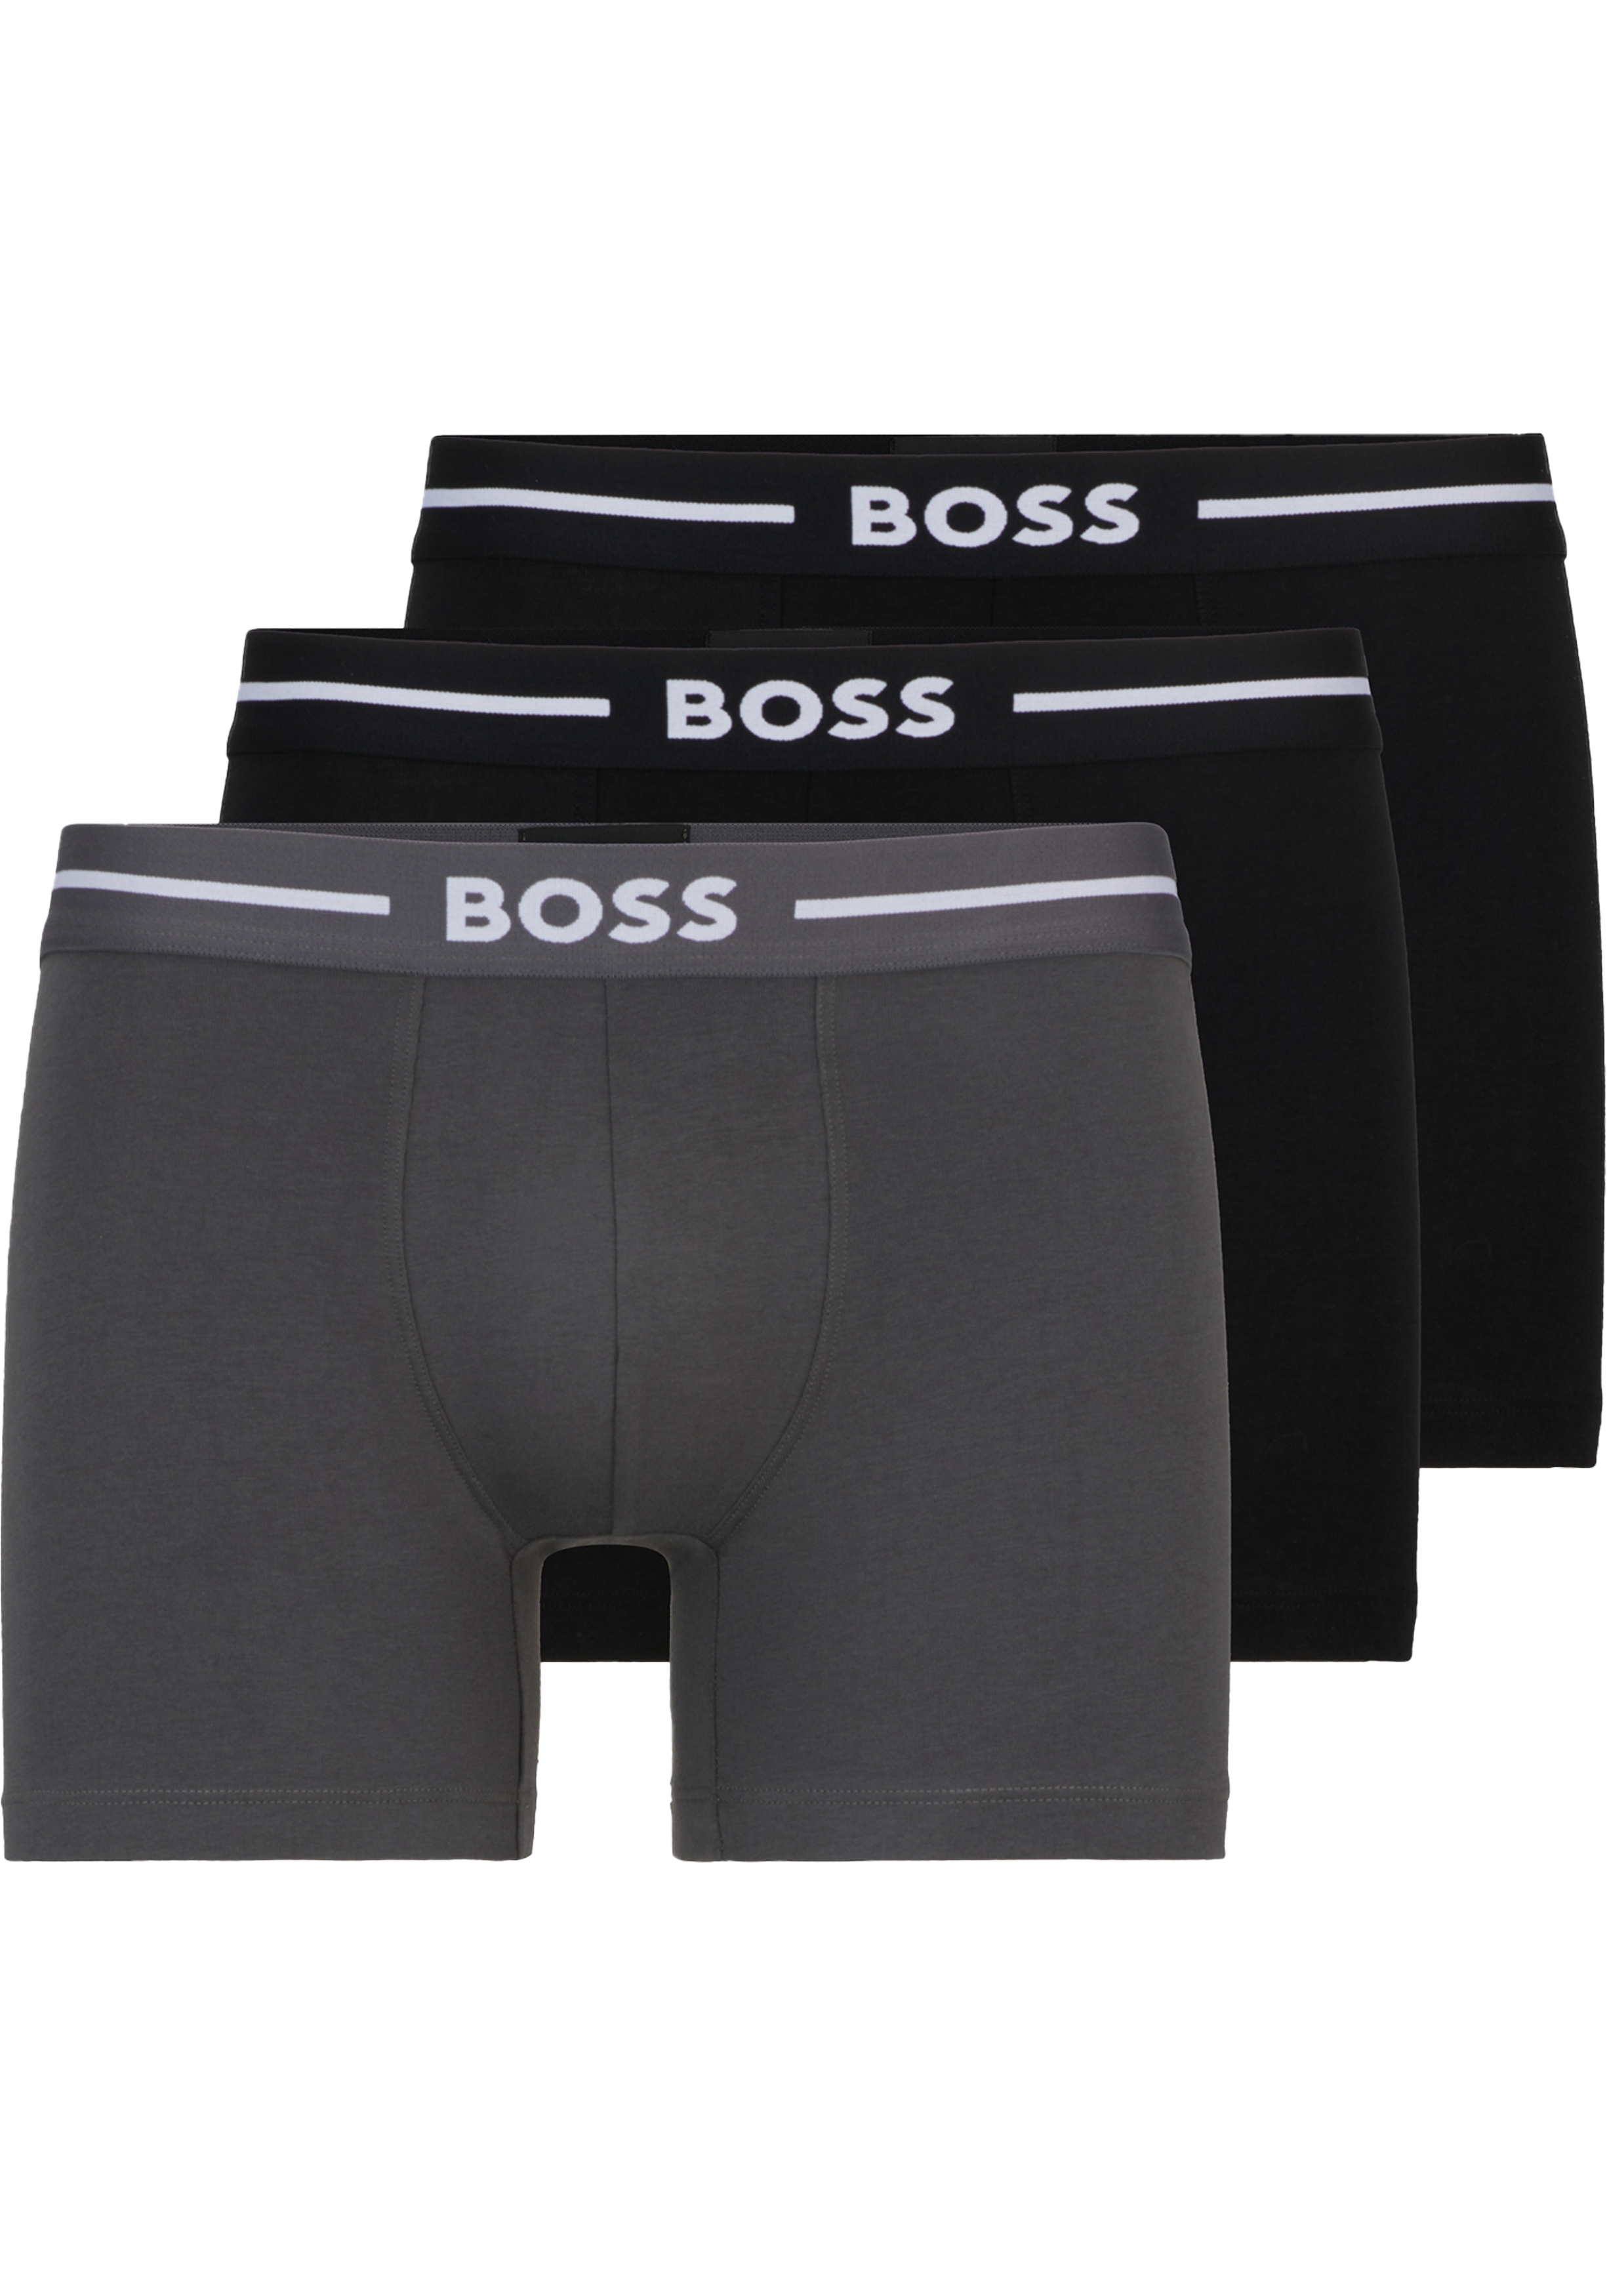 HUGO BOSS Bold boxer briefs (3-pack), heren boxers normale lengte, multicolor